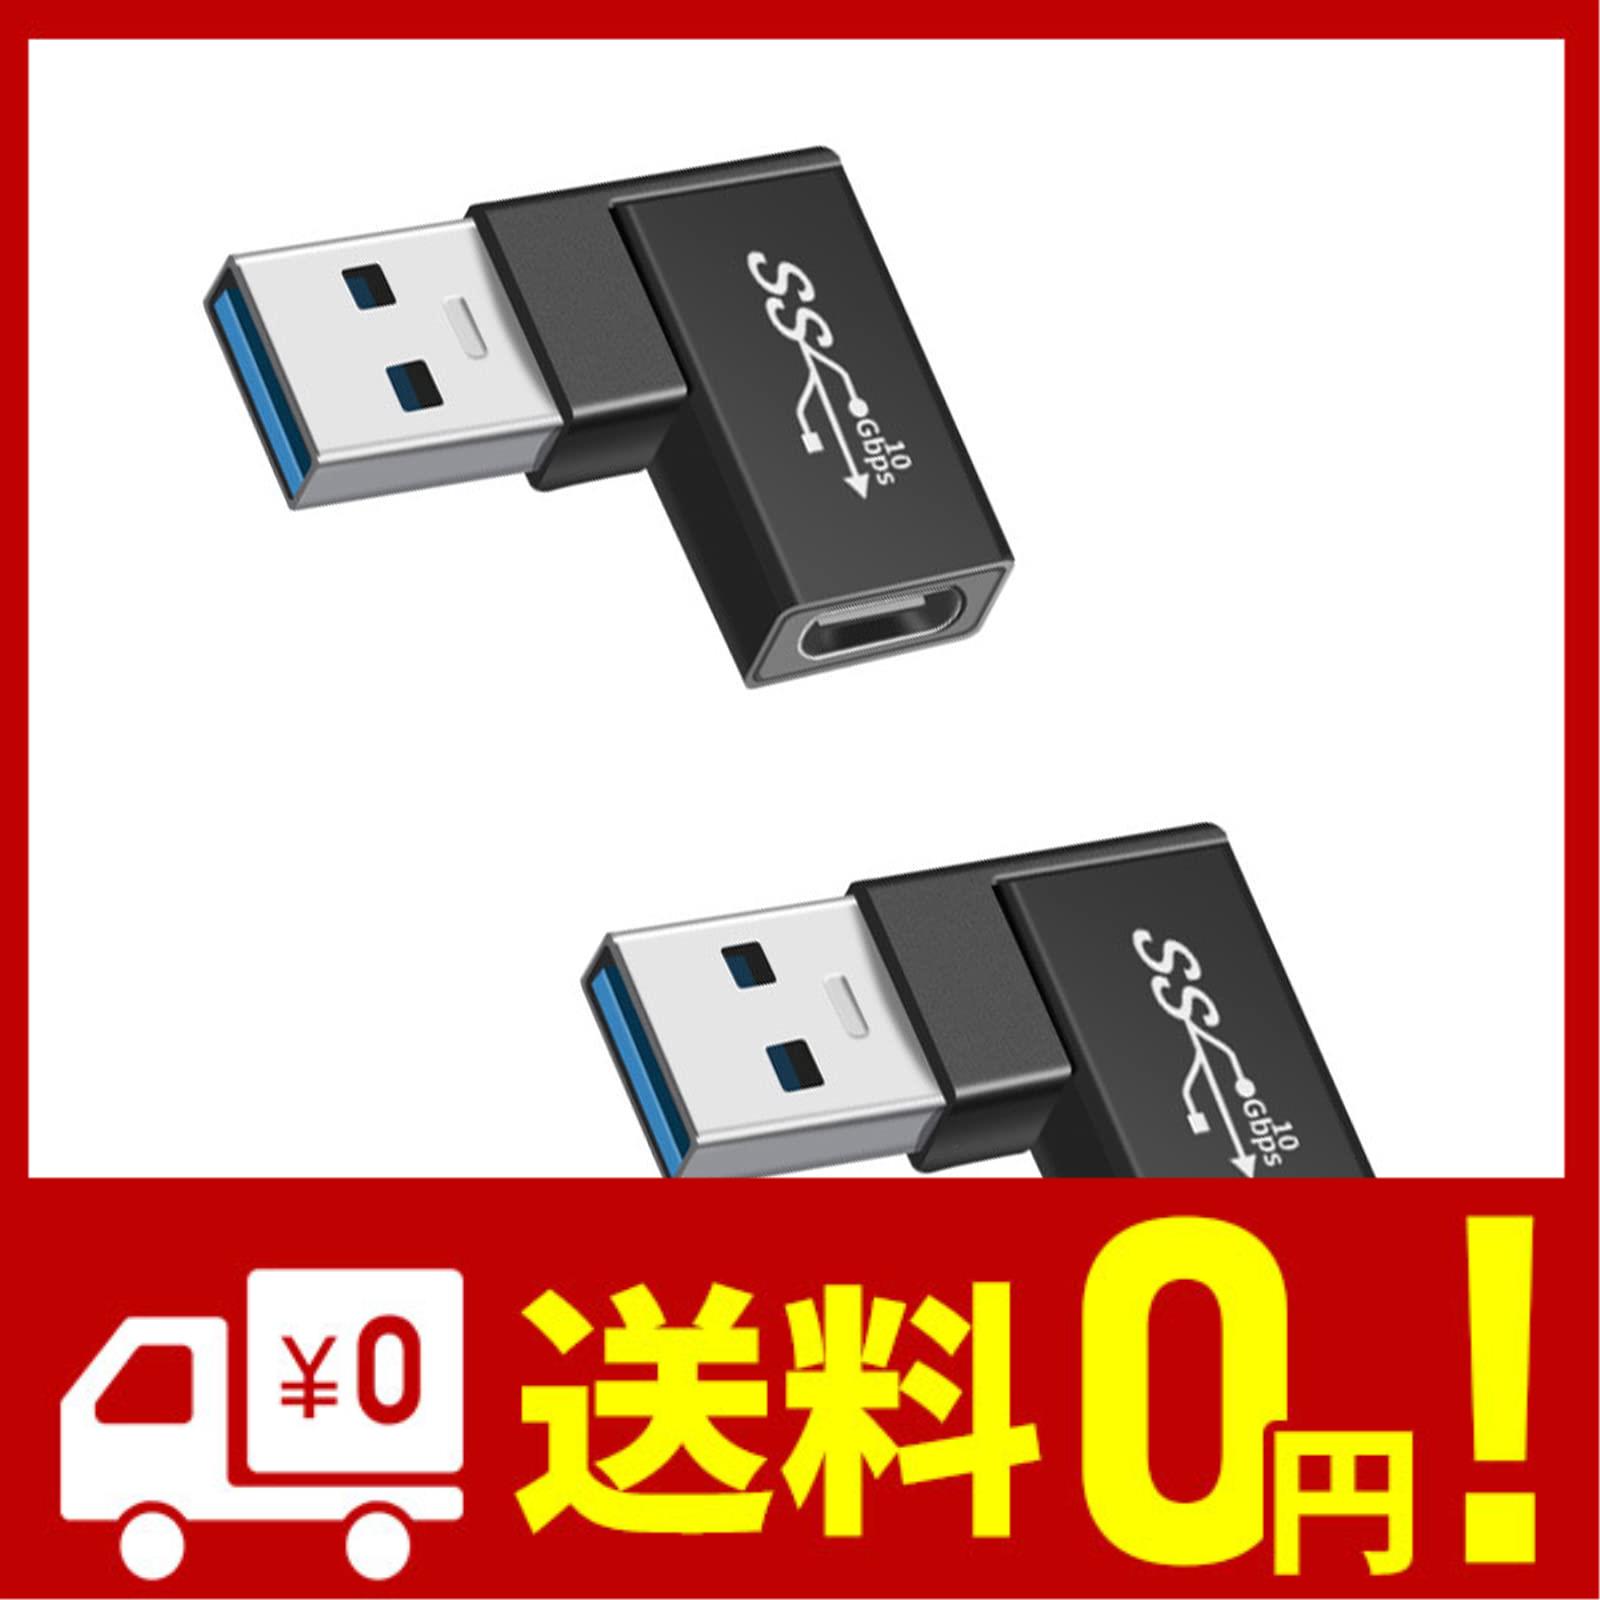 USB3.0 変換アダプタ左右 2個セット YITONGXXSUN90度 L型 USB Type C 変換コネクタ データ10Gbps USB C メス to USB A オス変換アダプタ